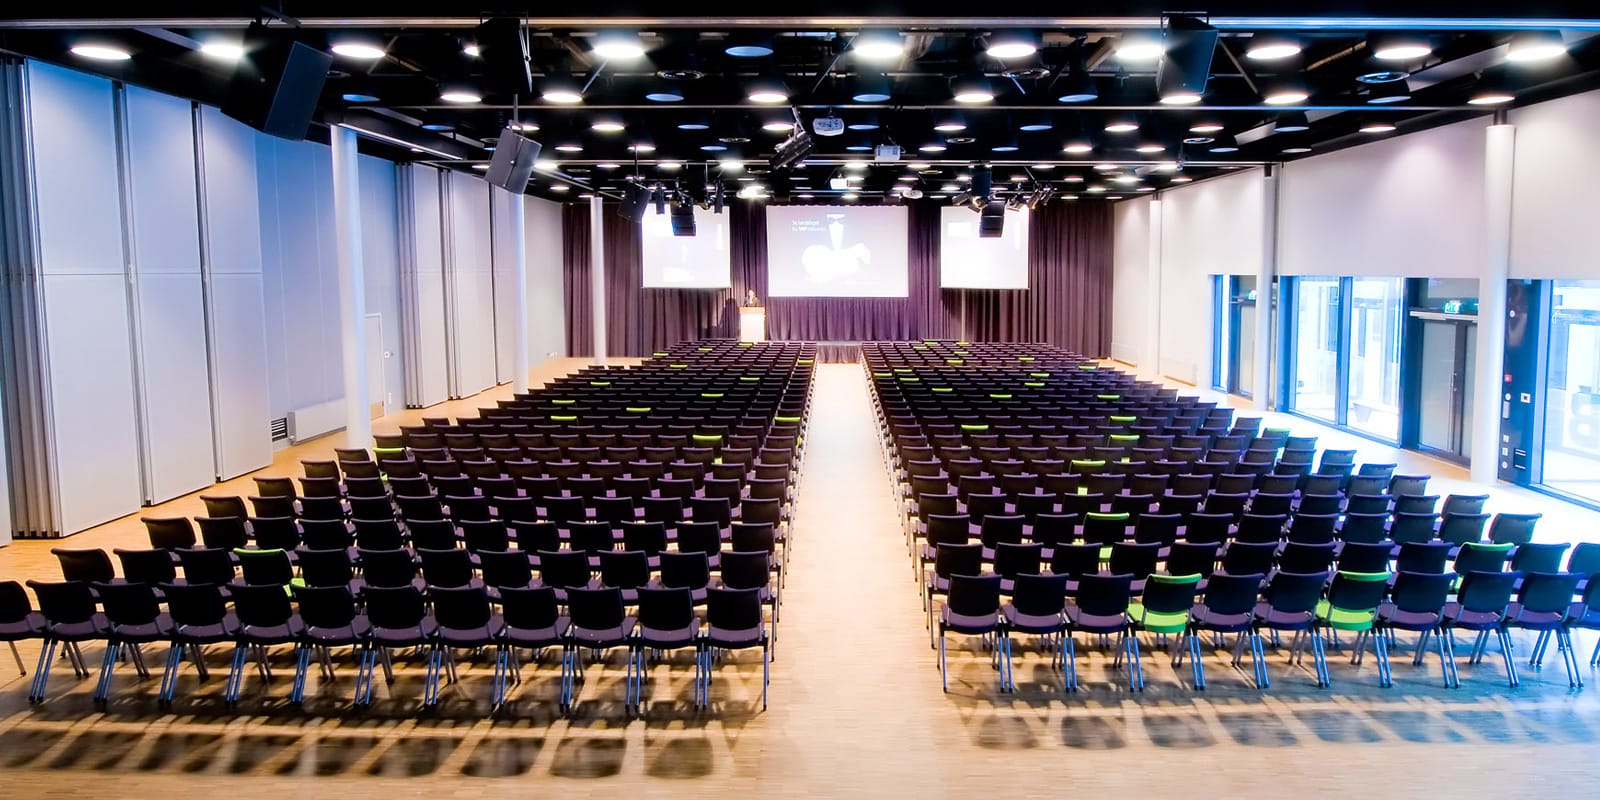 konferenssal med duk i bakkant av bild, stolmöblering, 450 platser